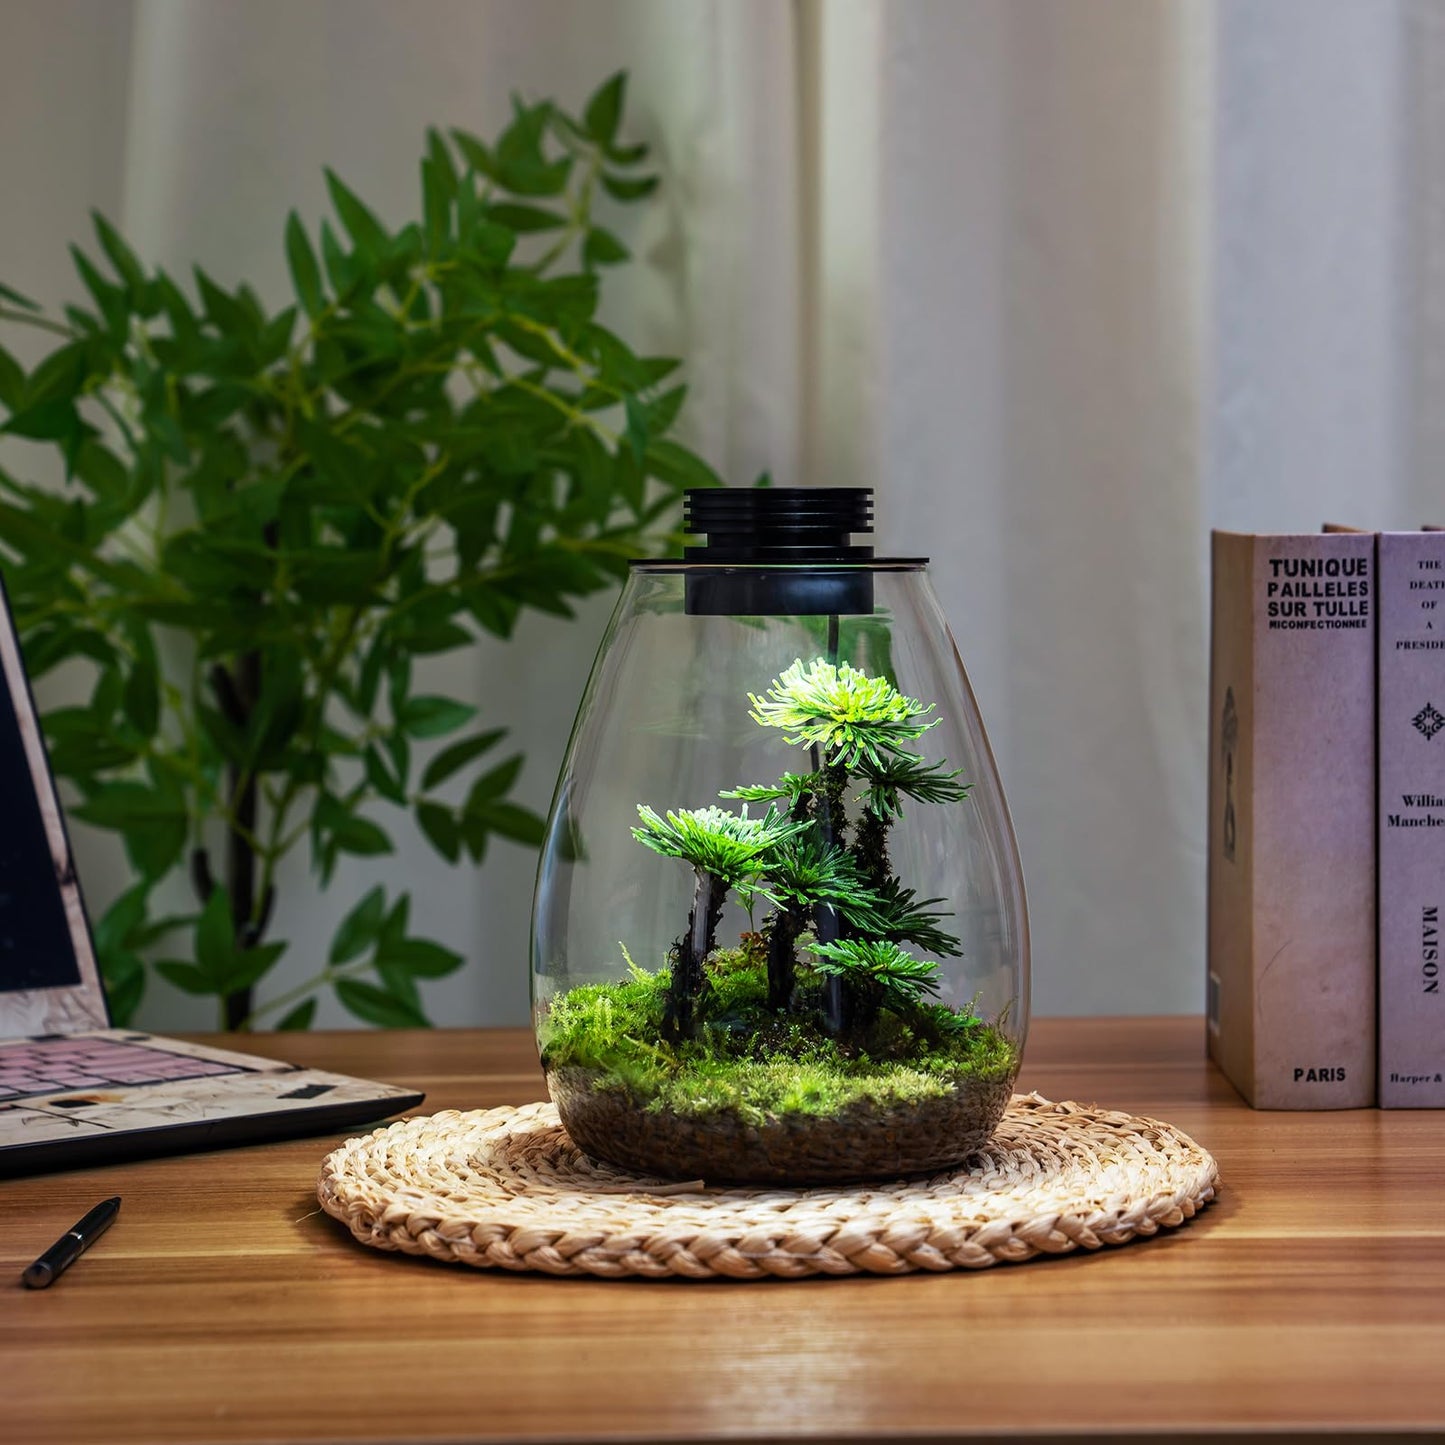 Desktop Glass Plant Terrarium with Grow Light (H:7.8" D:6.7"), for Succulent, Moss, Miniature Gardening Landscape, Betta Fish Tank, Indoor Plant Growth, Office Home Decoration, Plant Lovers Gifts - Plantonio